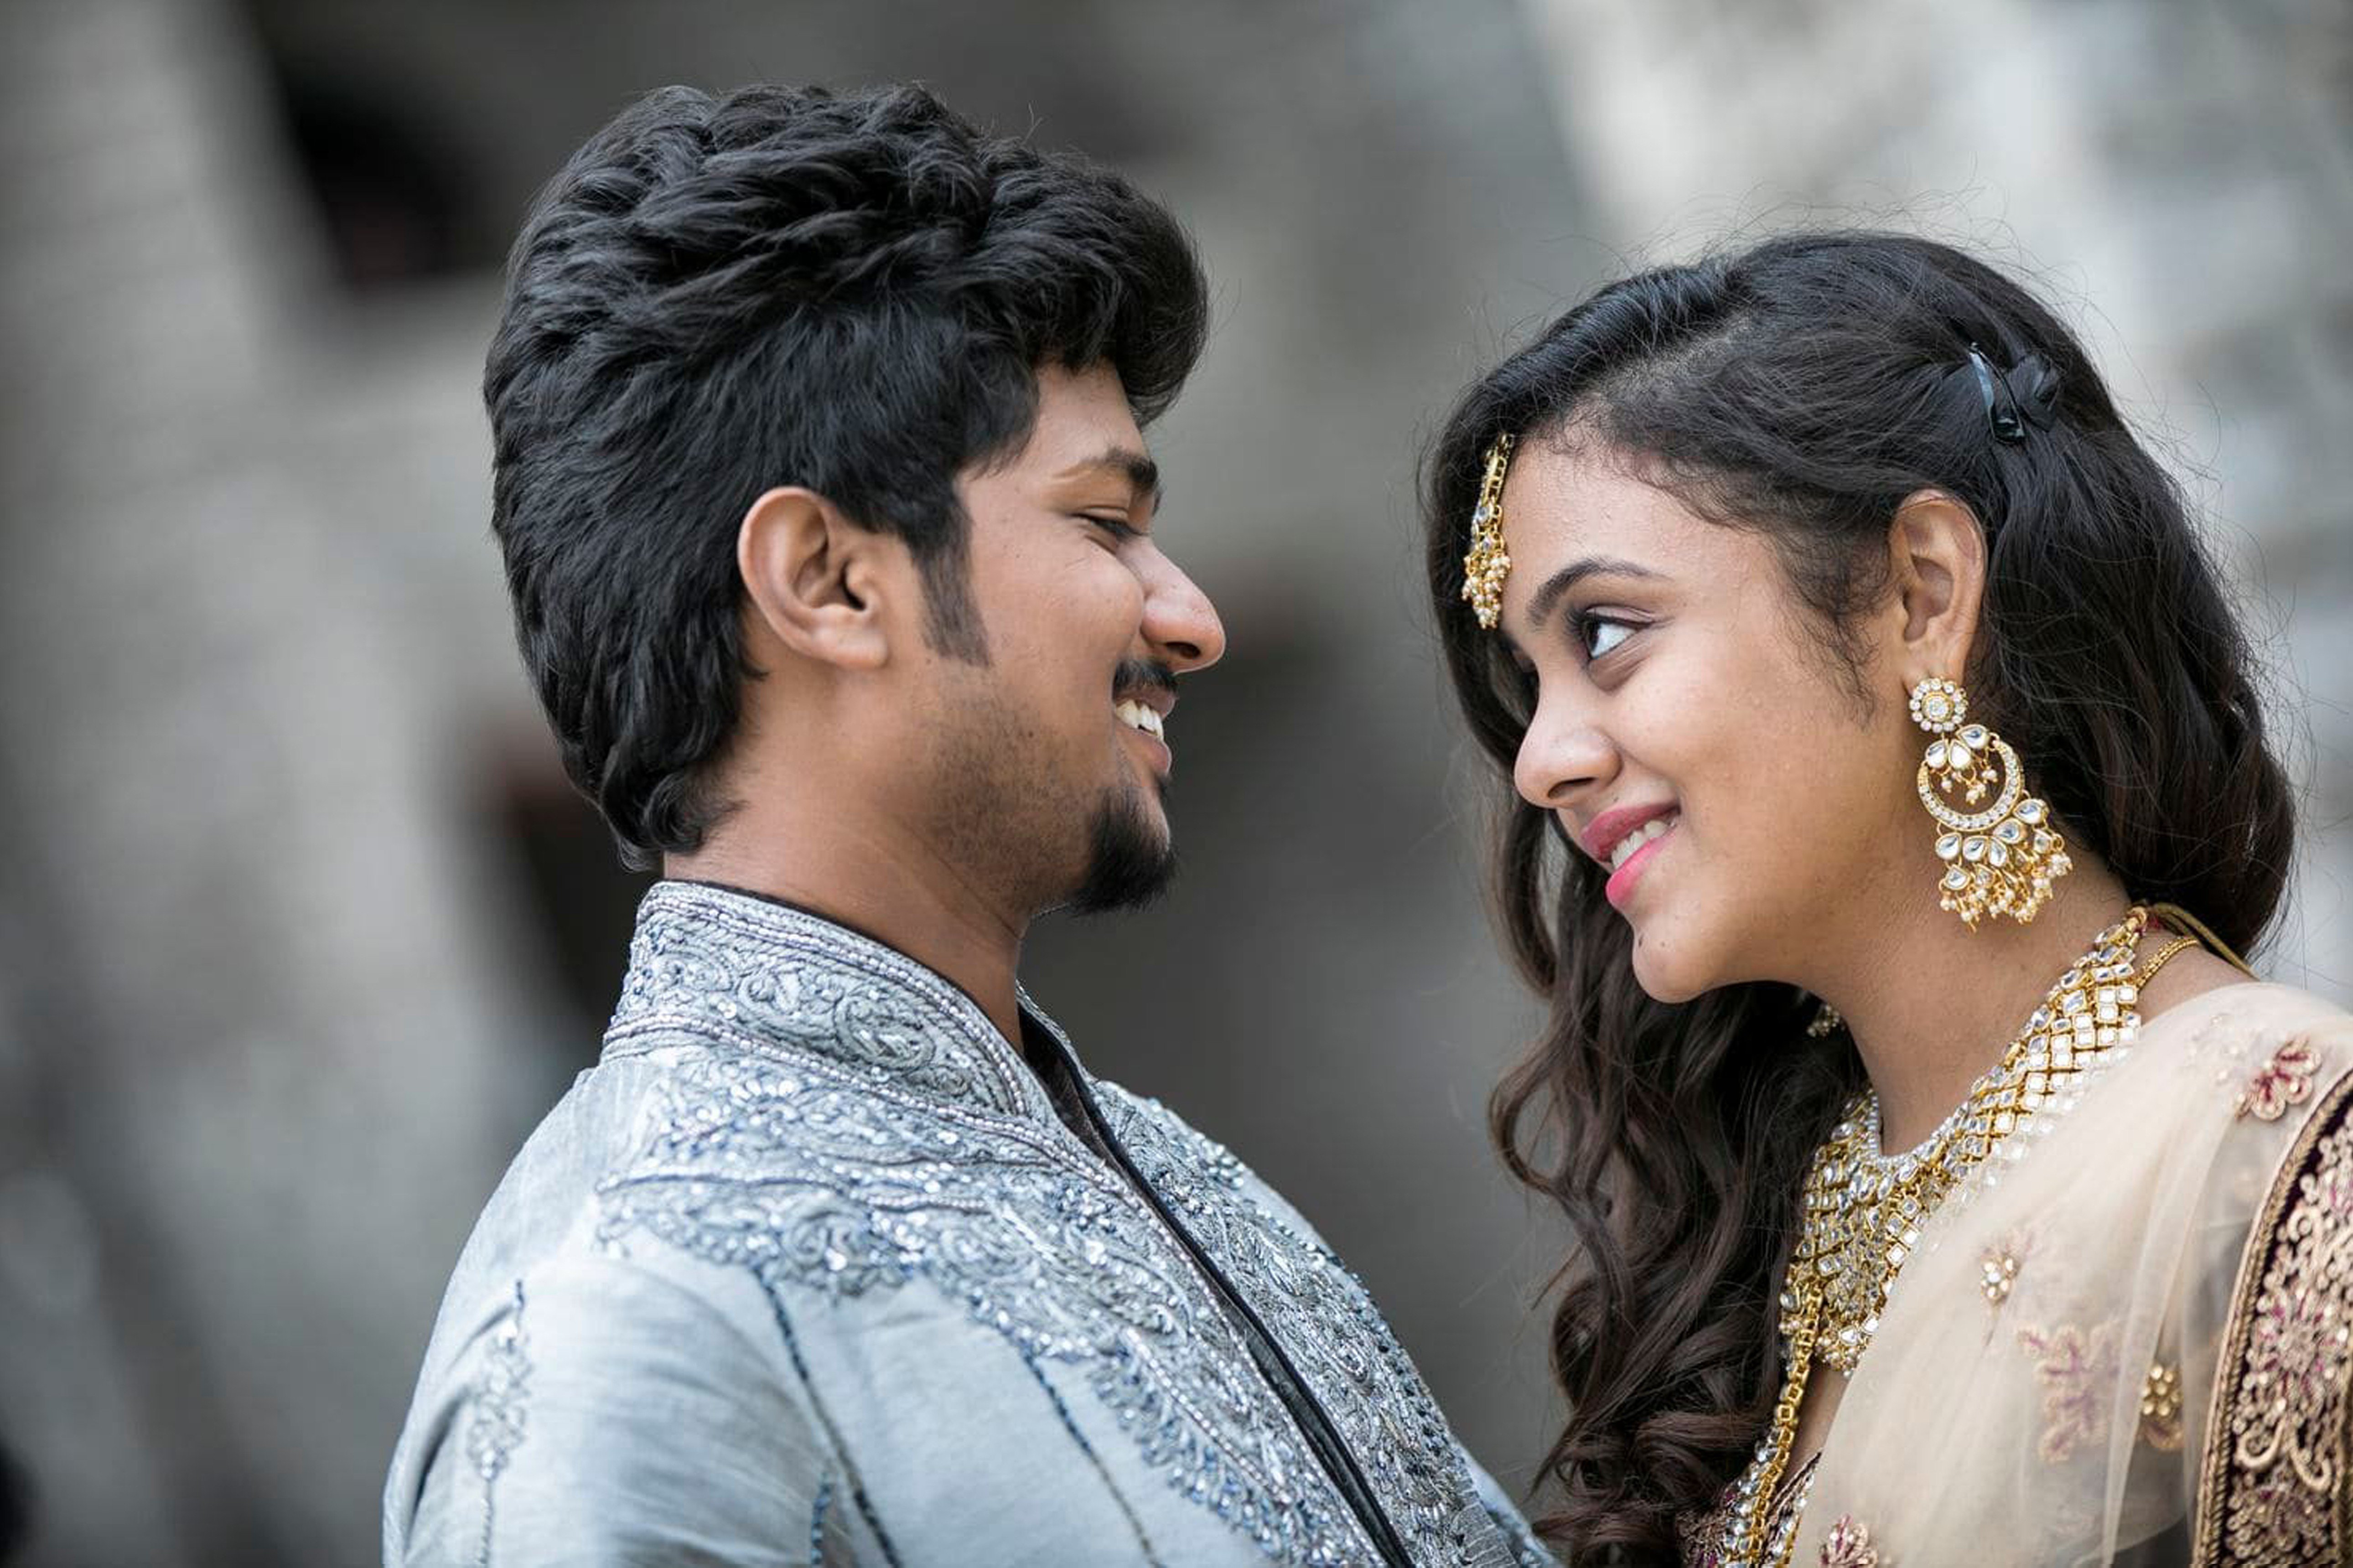 Pranay Perumalla and Amrutha Varshini at their wedding reception in August 2018.